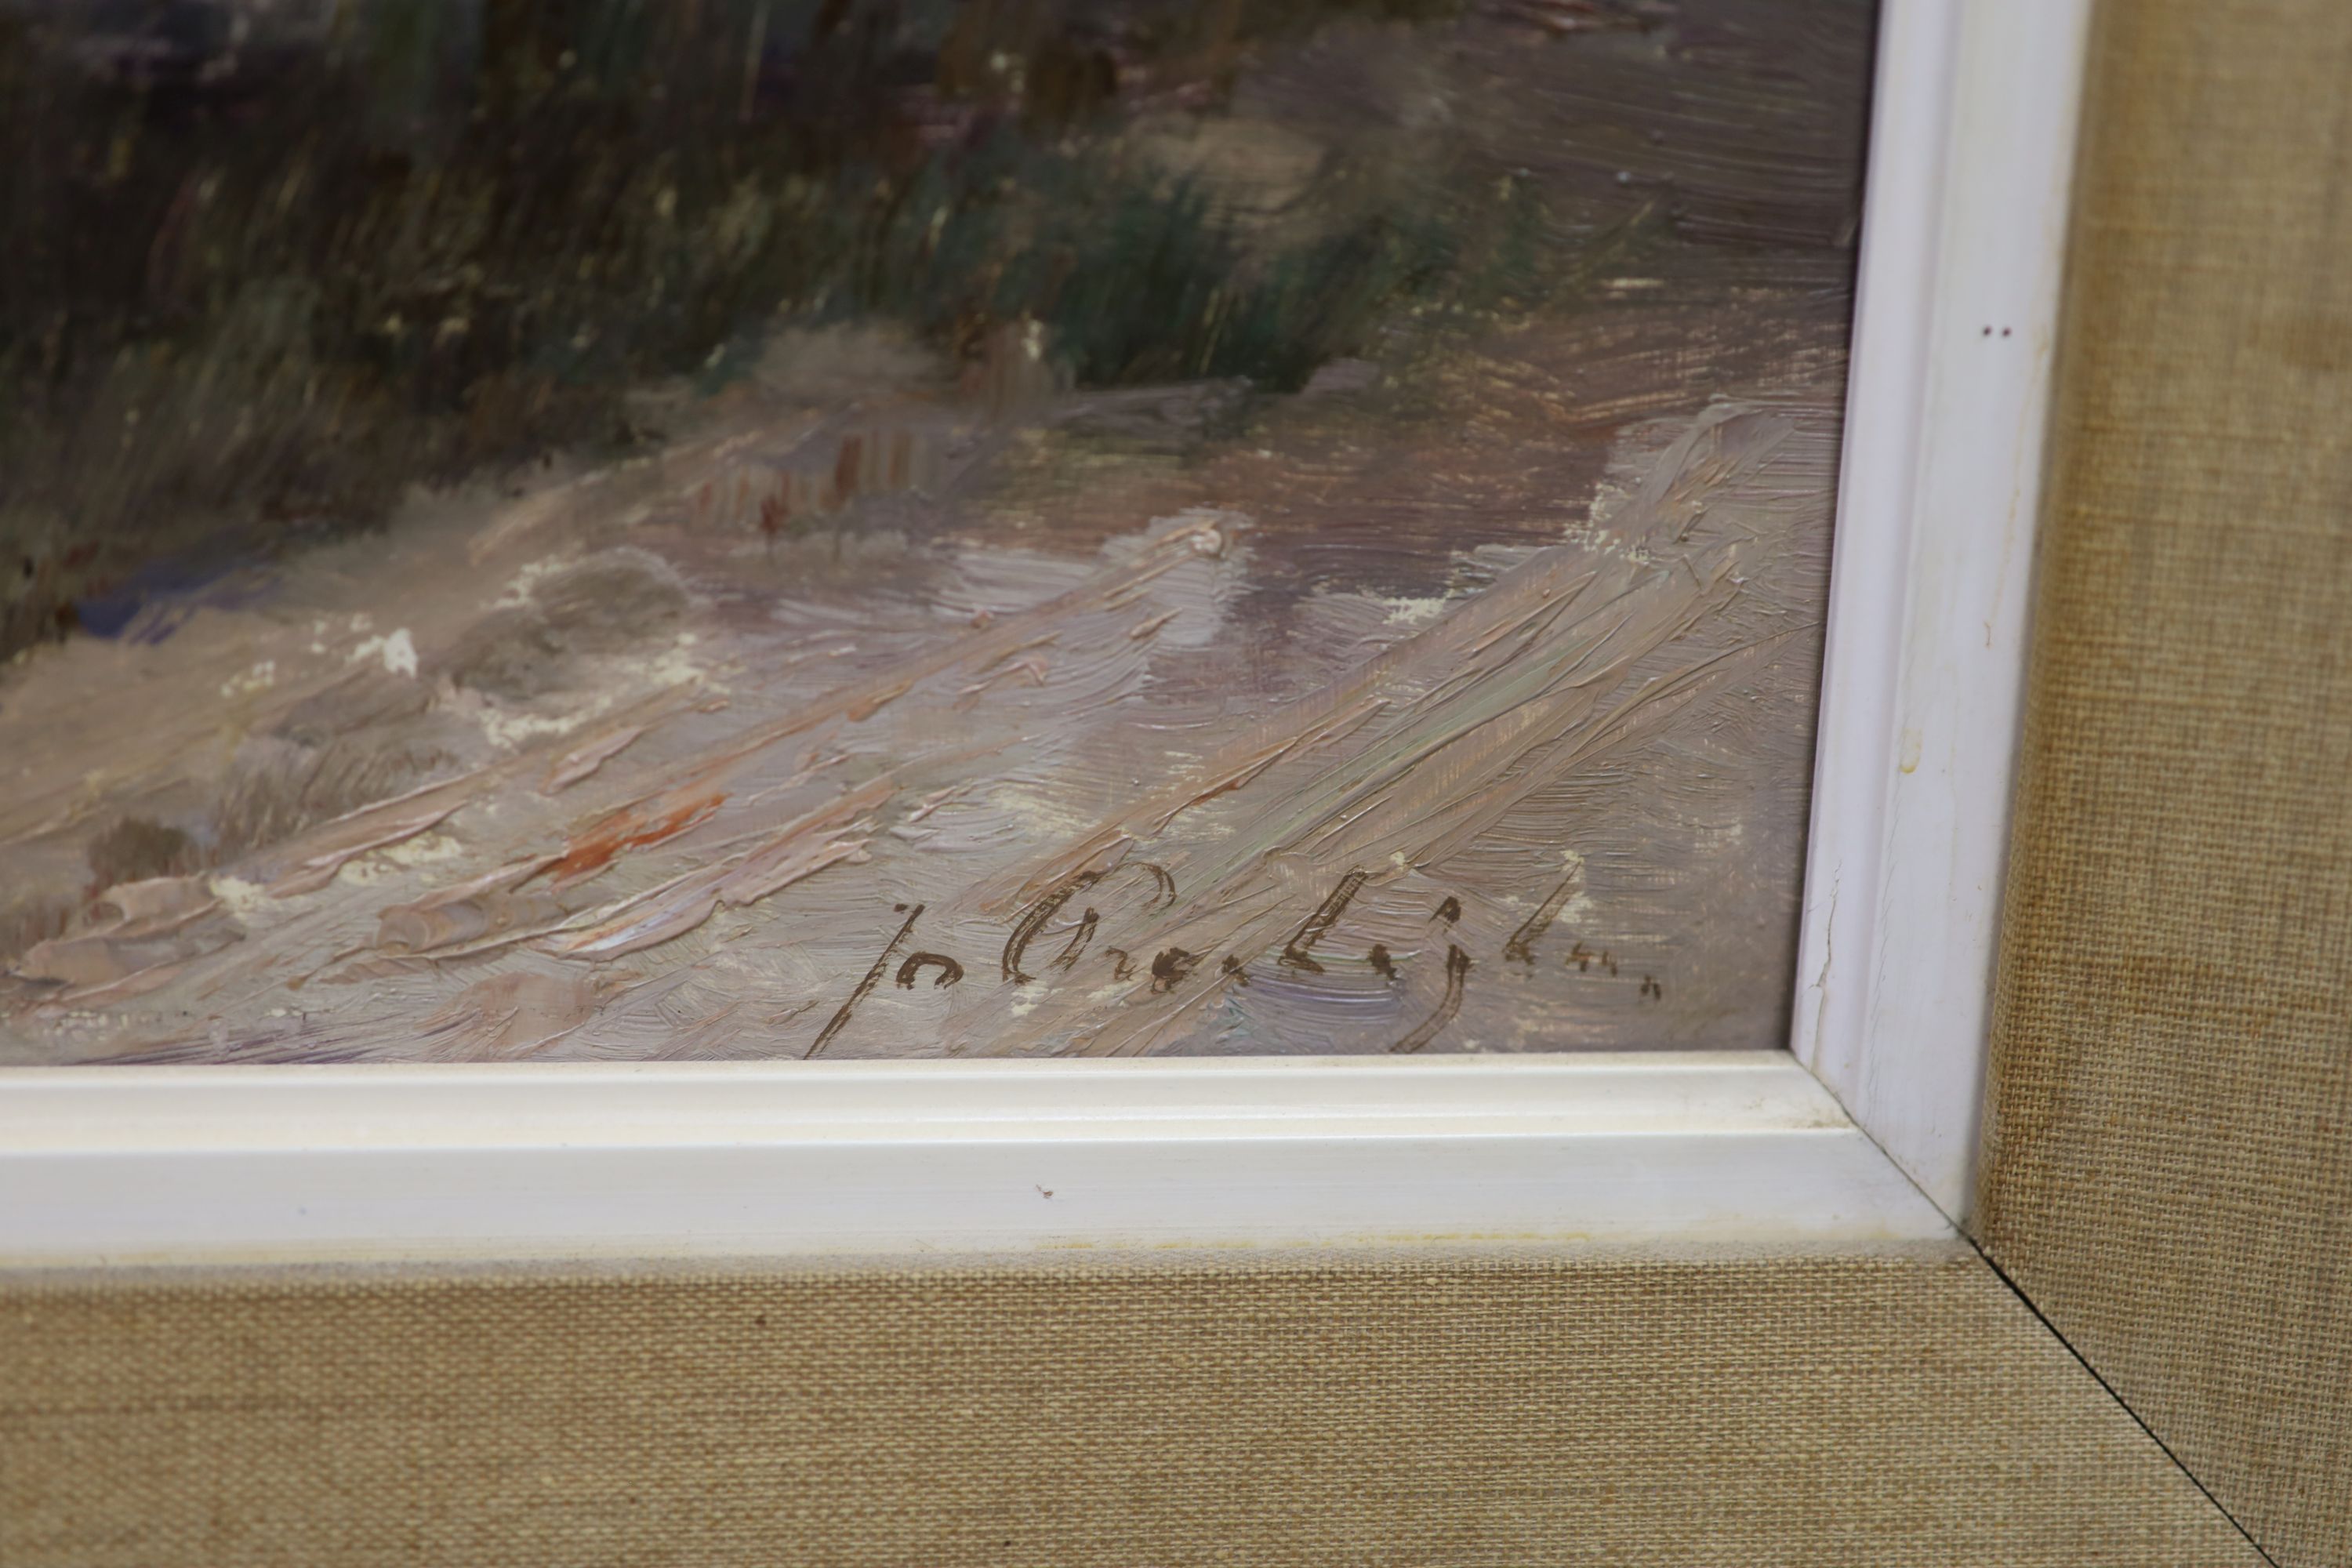 Josef Prochazka (1909-1985), oil on board, 'The path around the lake', signed, 1969 Stacy Marks label verso, 50 x 70cm